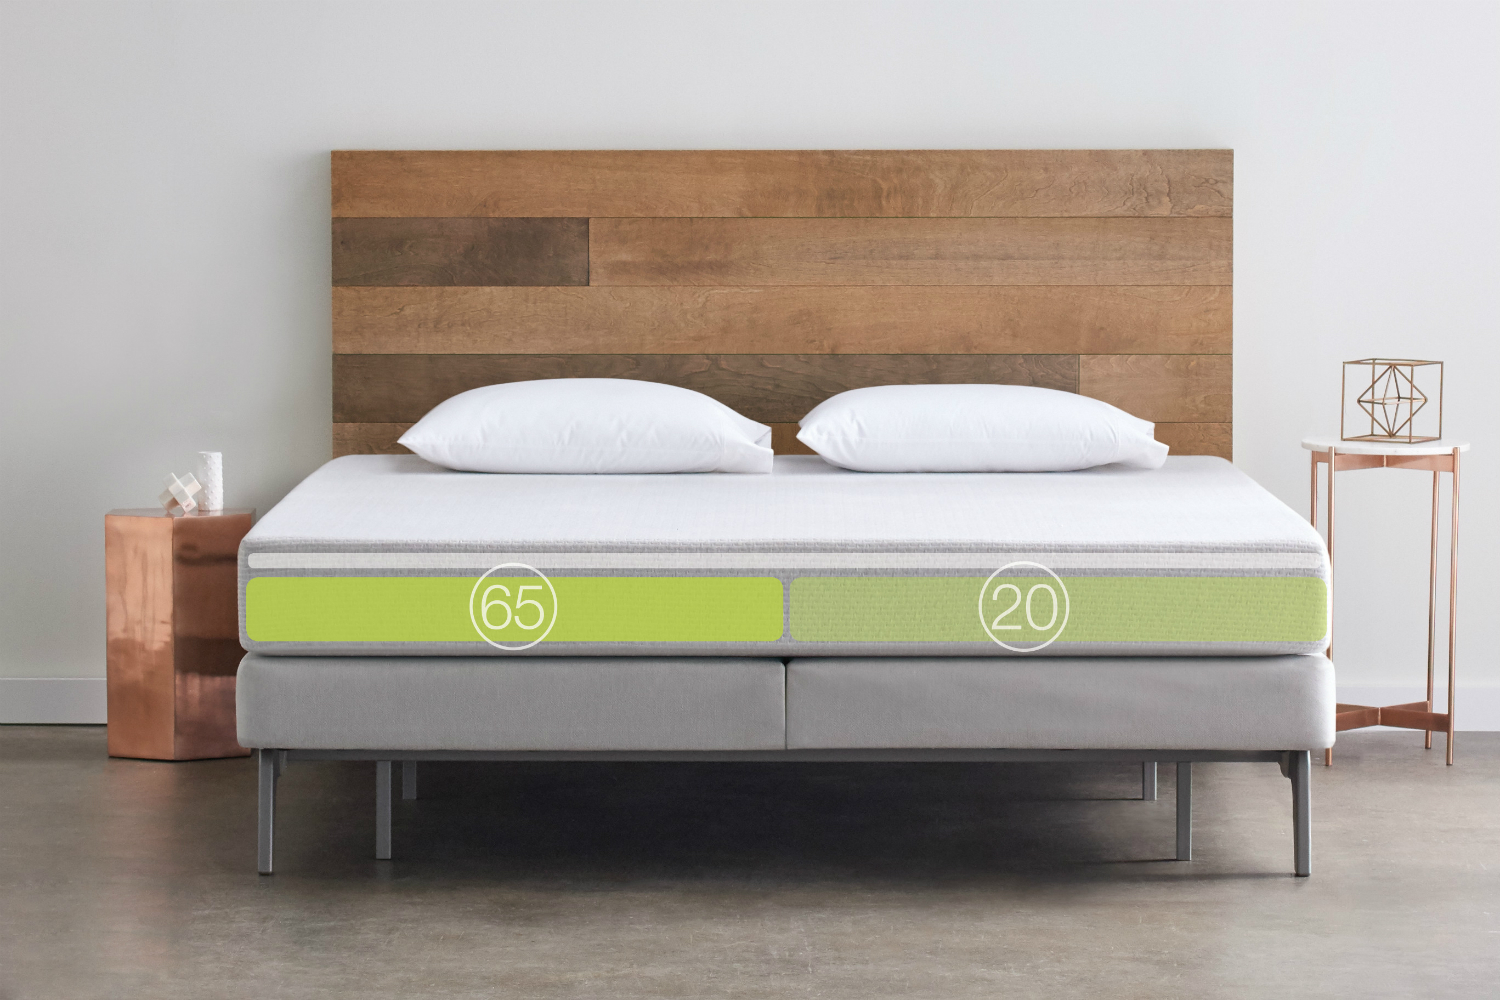 sleep number it bed smart mattress dual adjustability 2